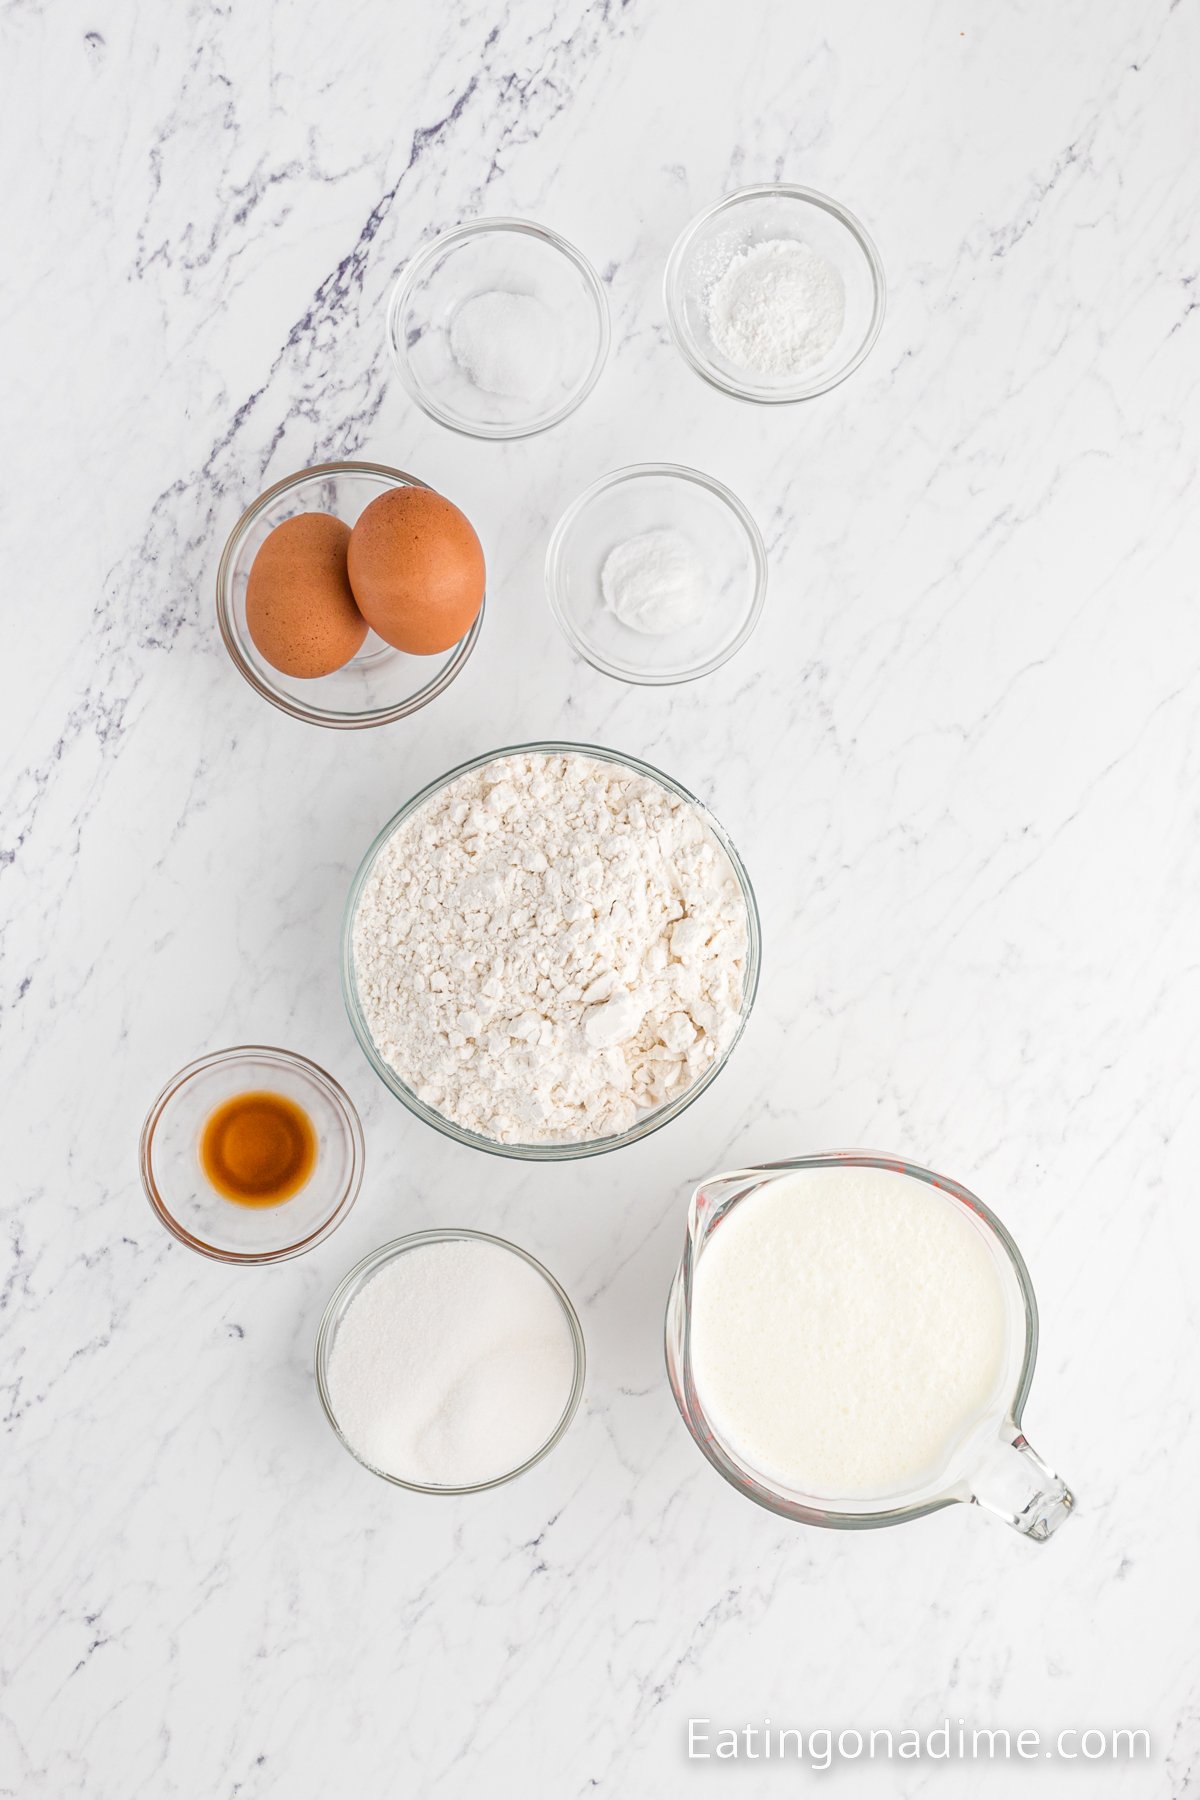 Ingredients needed - flour, baking powder, baking soda, salt, sugar, eggs, heavy cream, vanilla